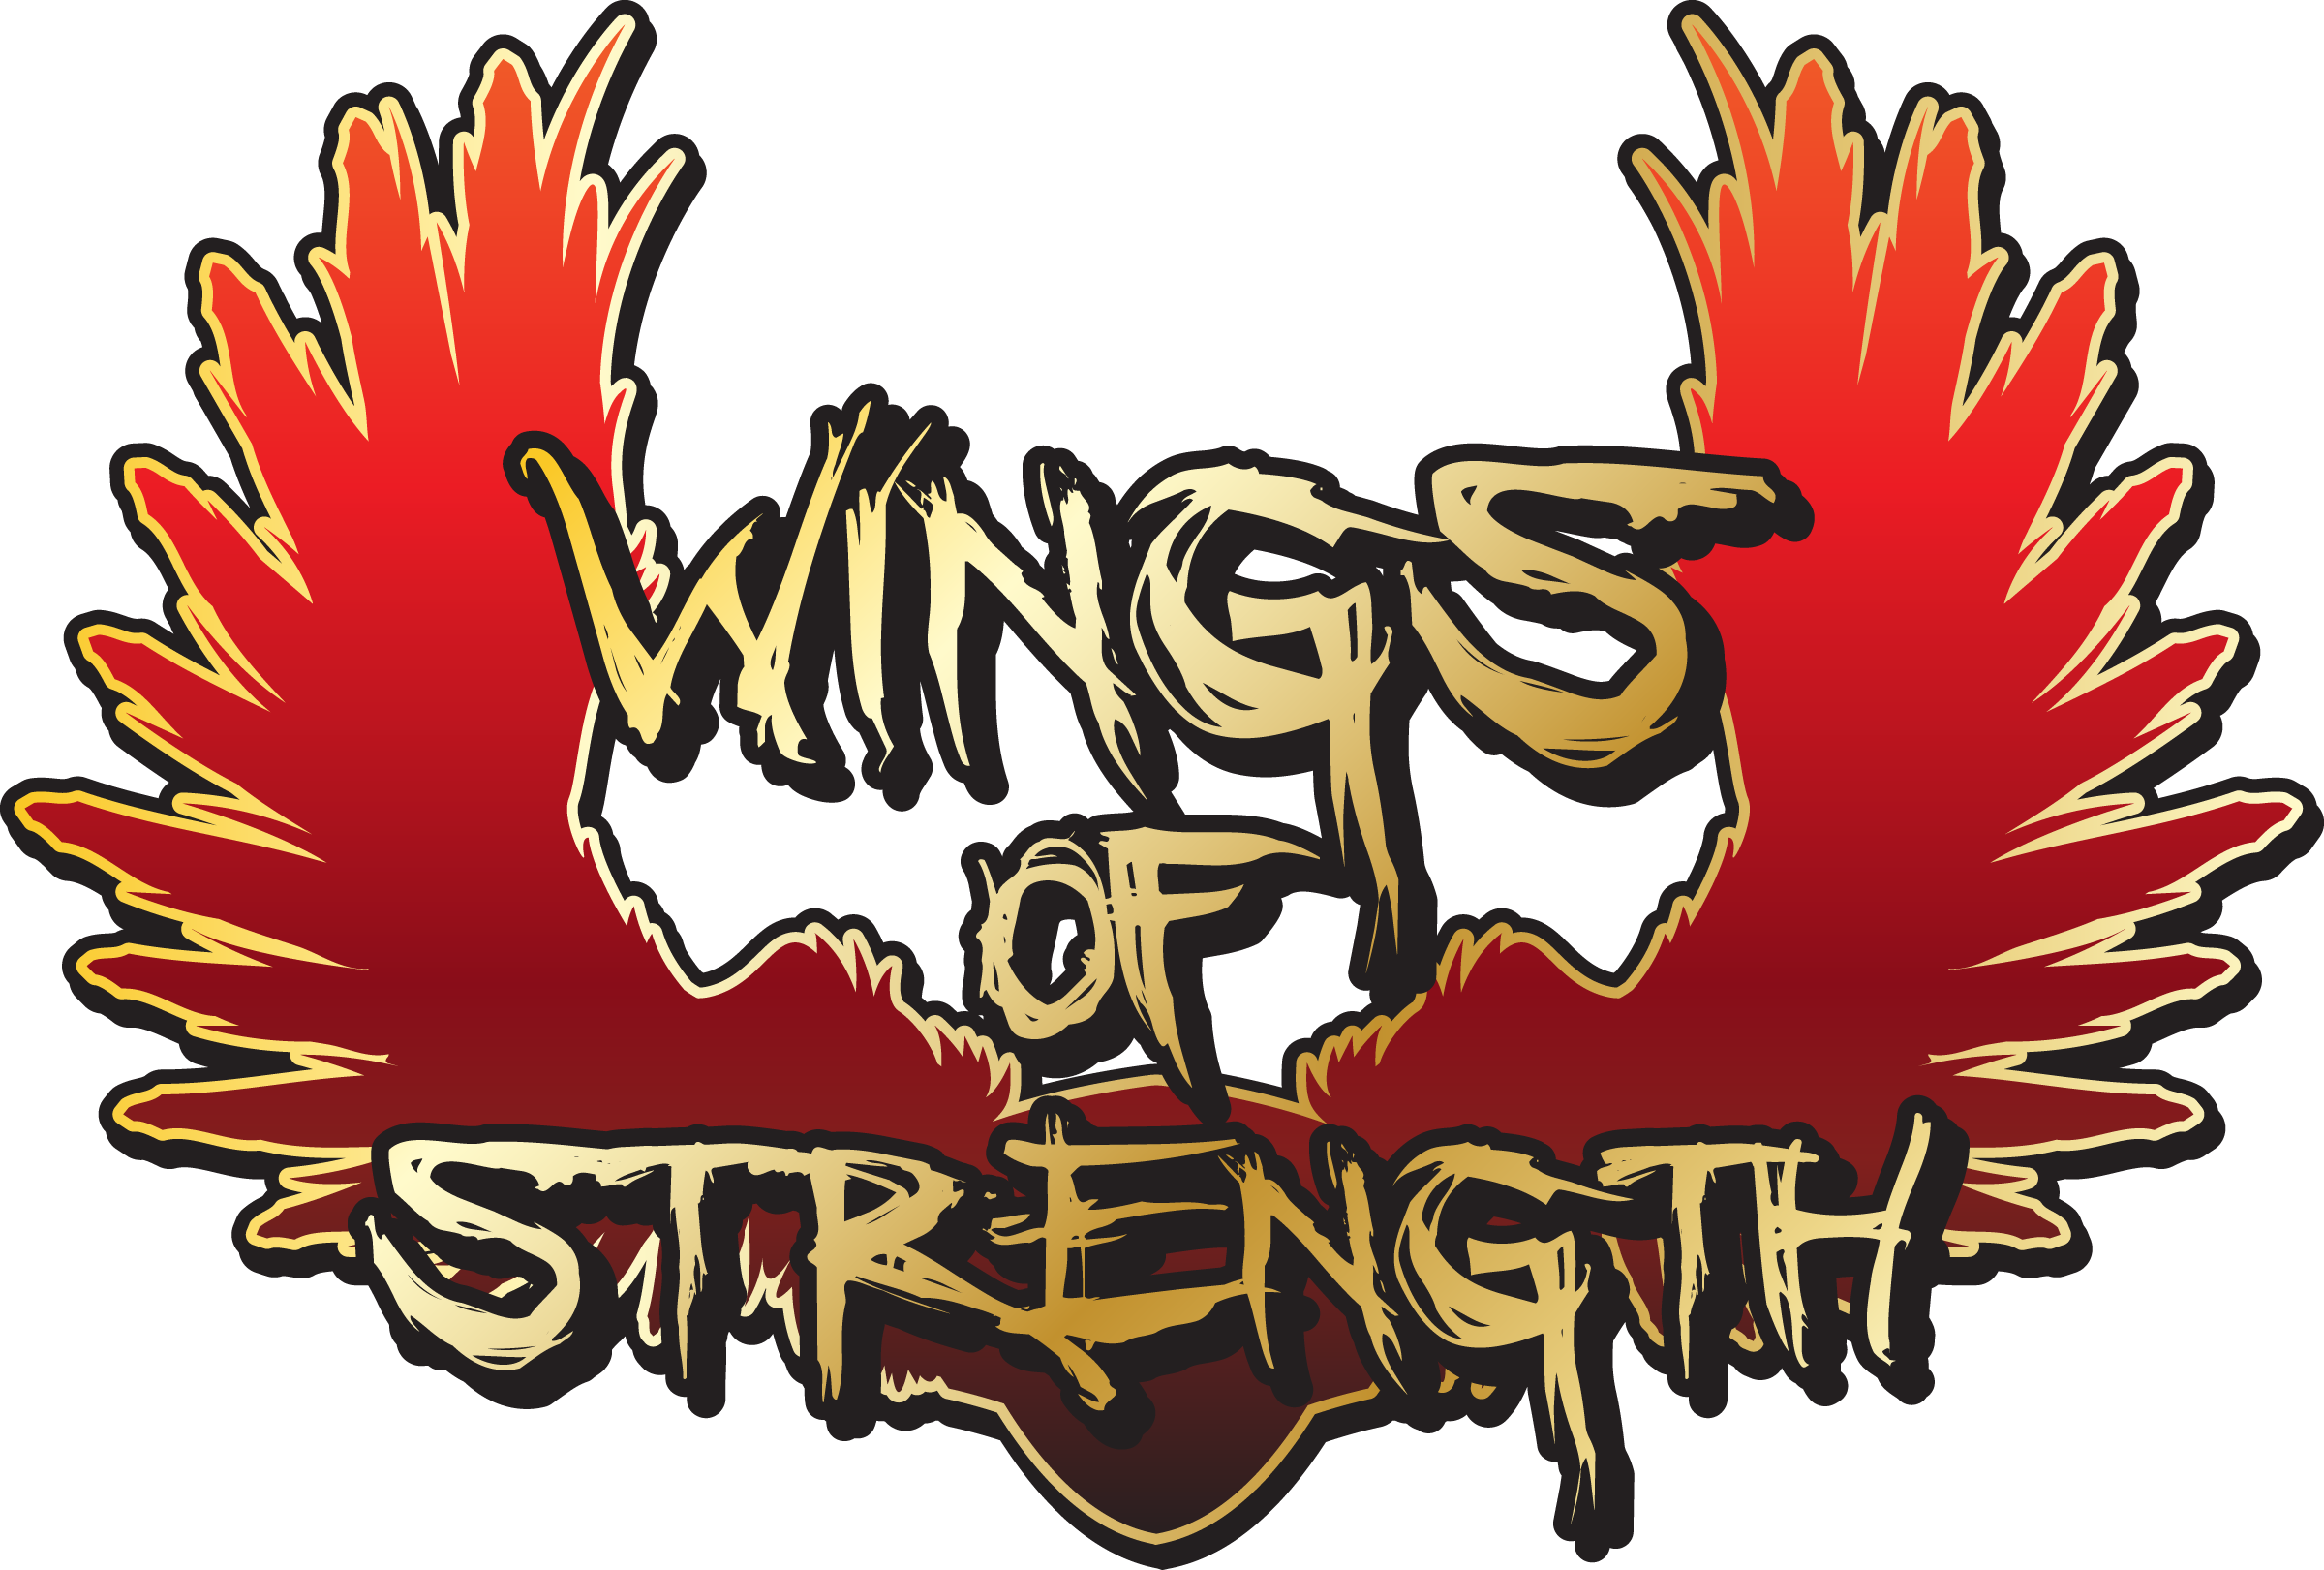 Wings of strength